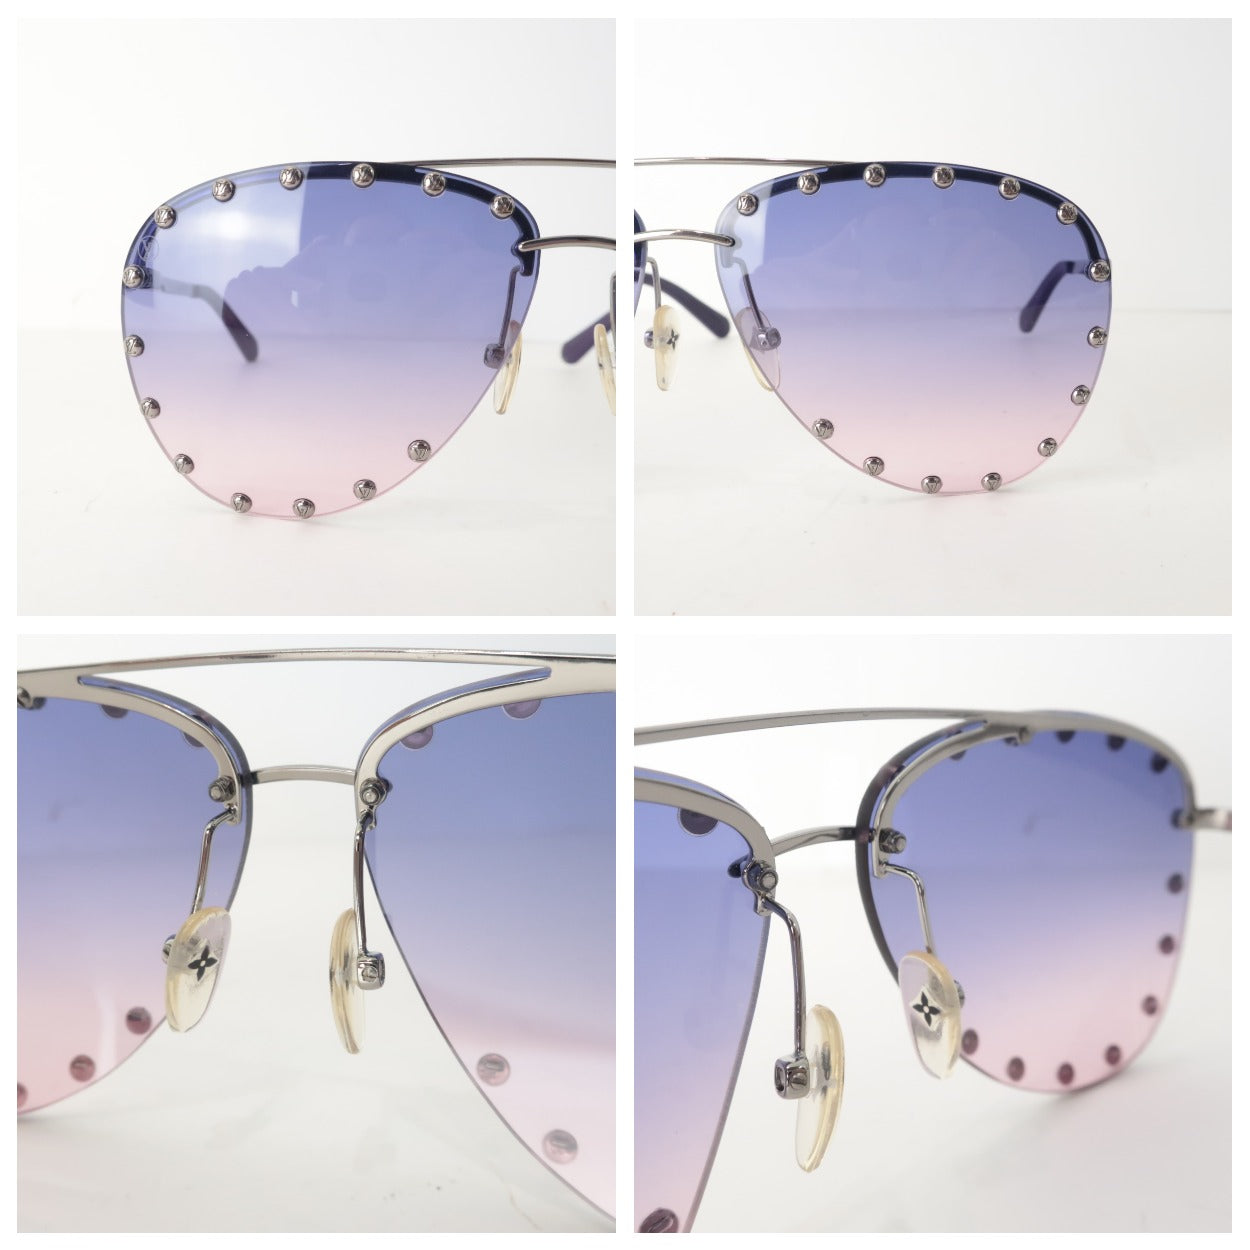 Louis Vuitton Pink Party Sunglasses – Bagaholic